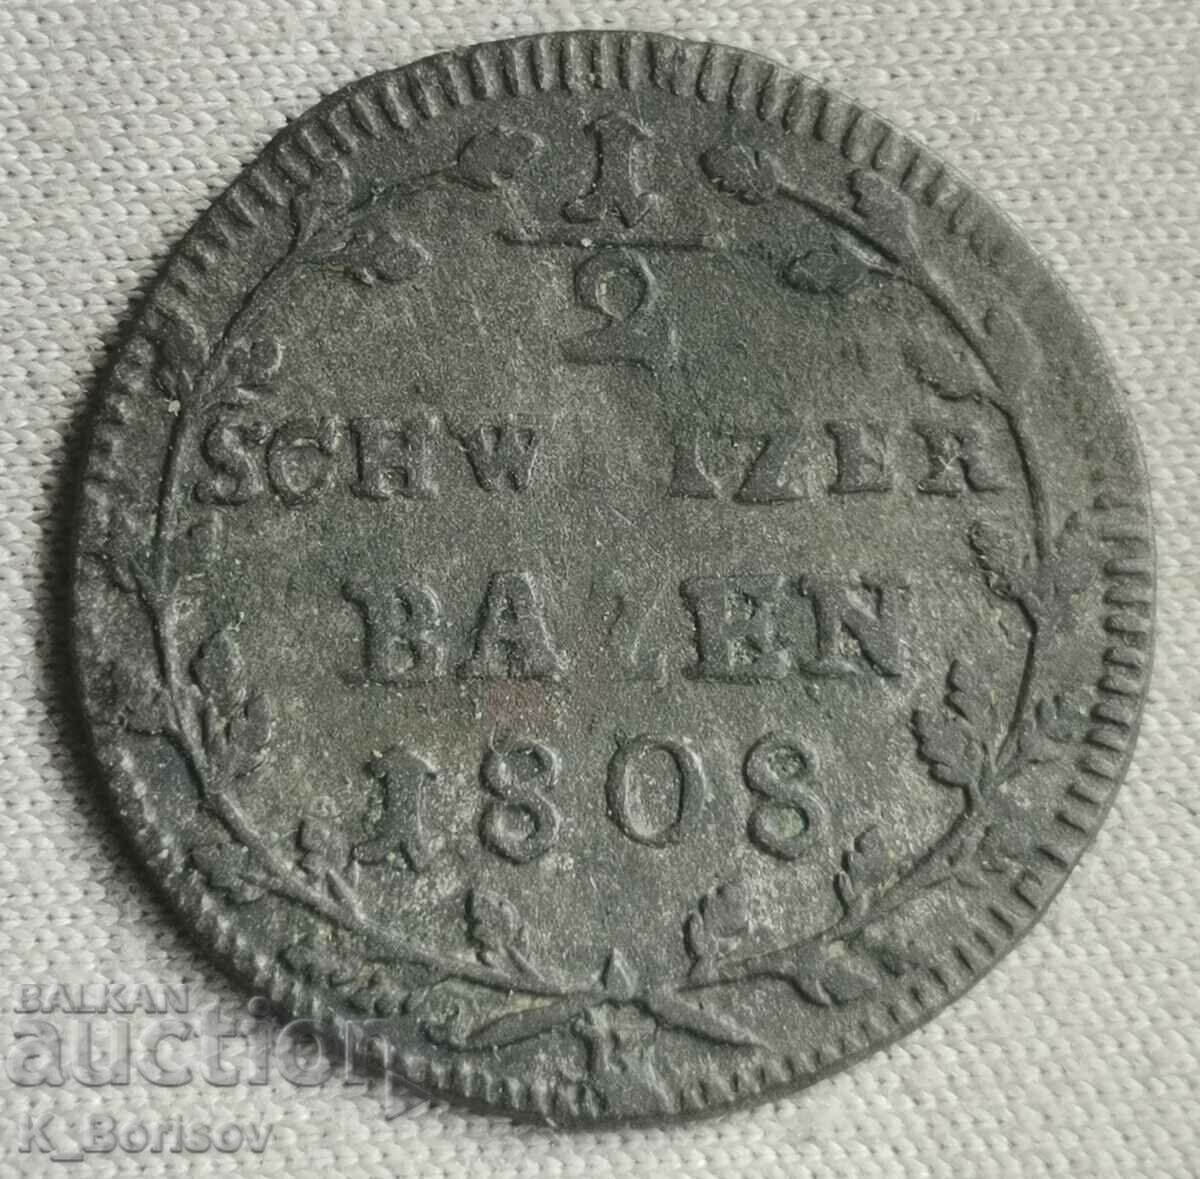 Saint Gallen 1/2 baten 1808